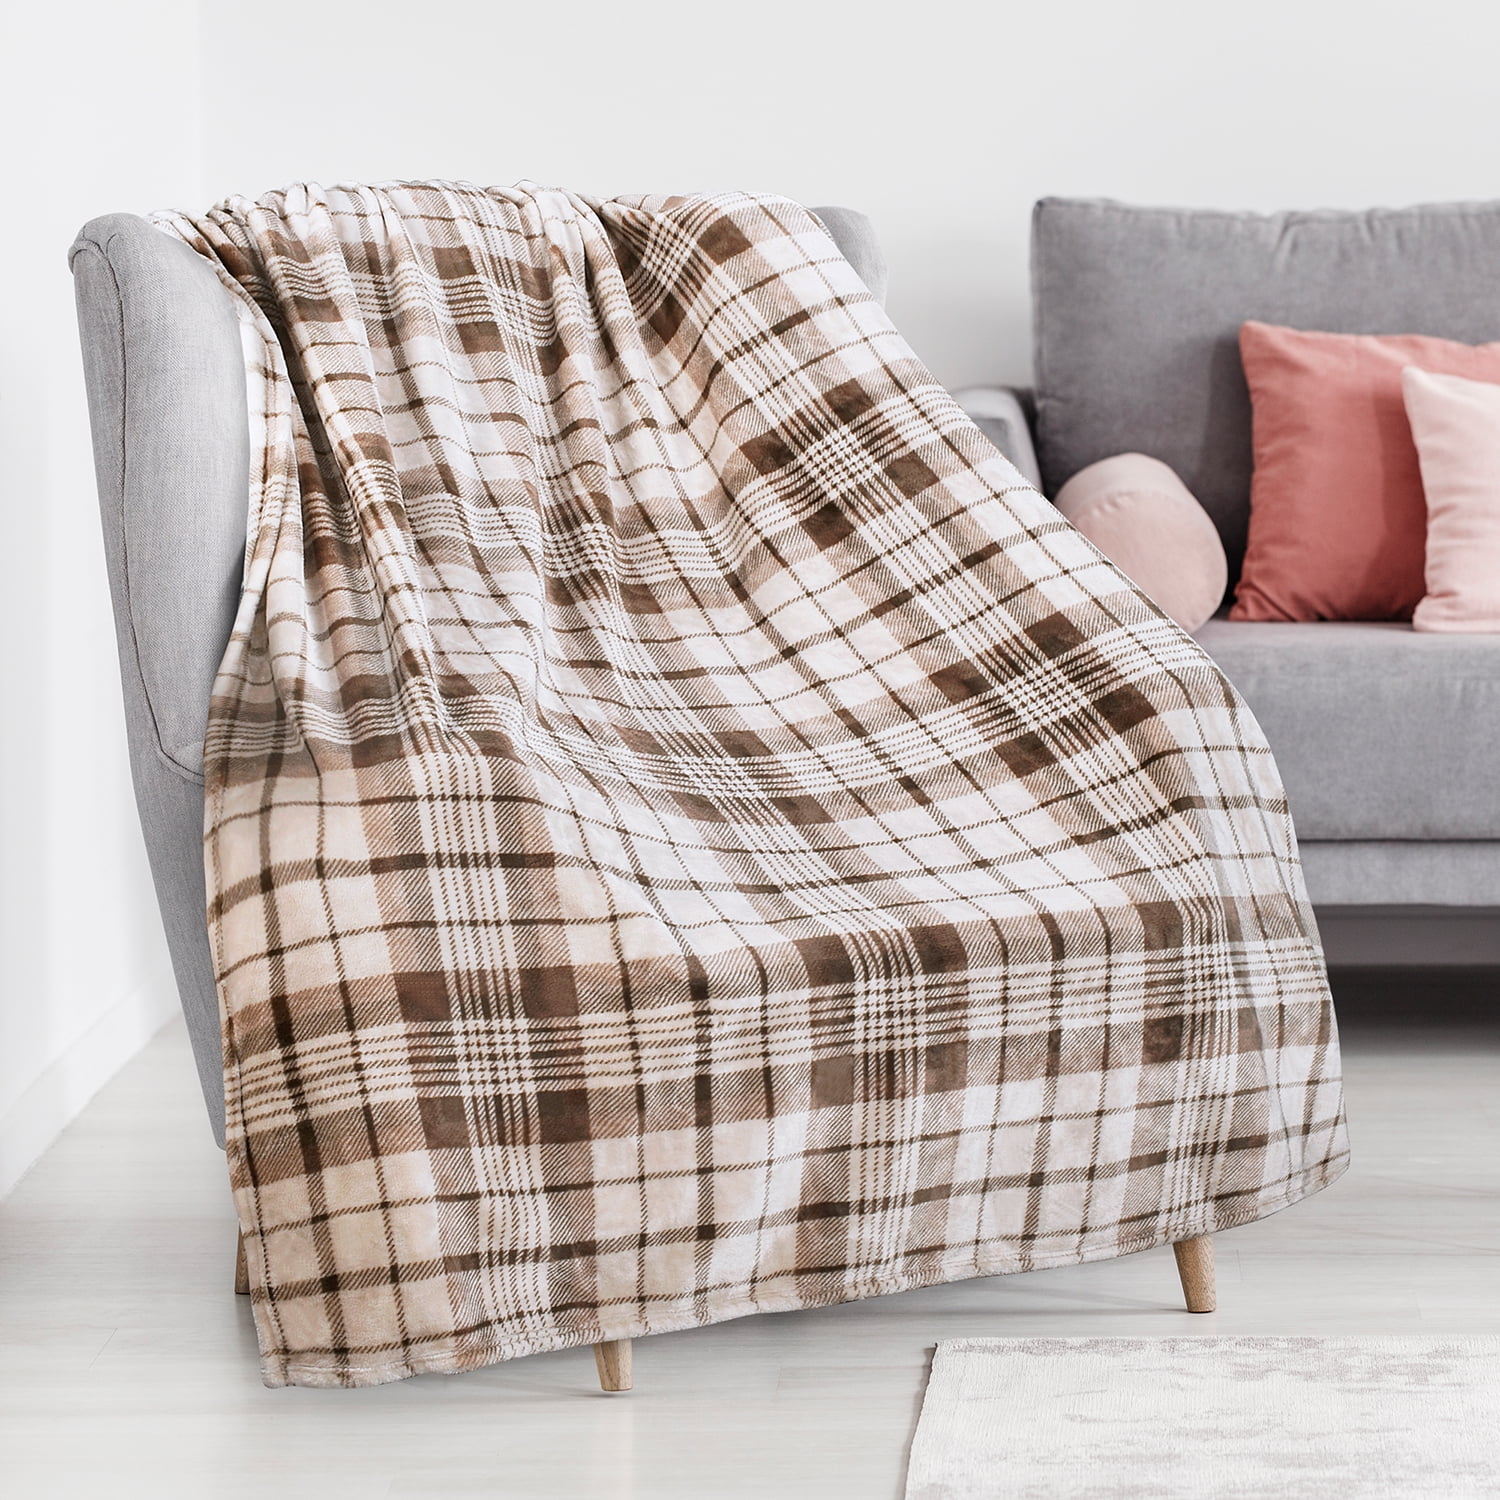 Tirrinia Sherpa Throw Couch Blanket, Super Soft TV Blanket, Black Chevron, Size: 50 x 60